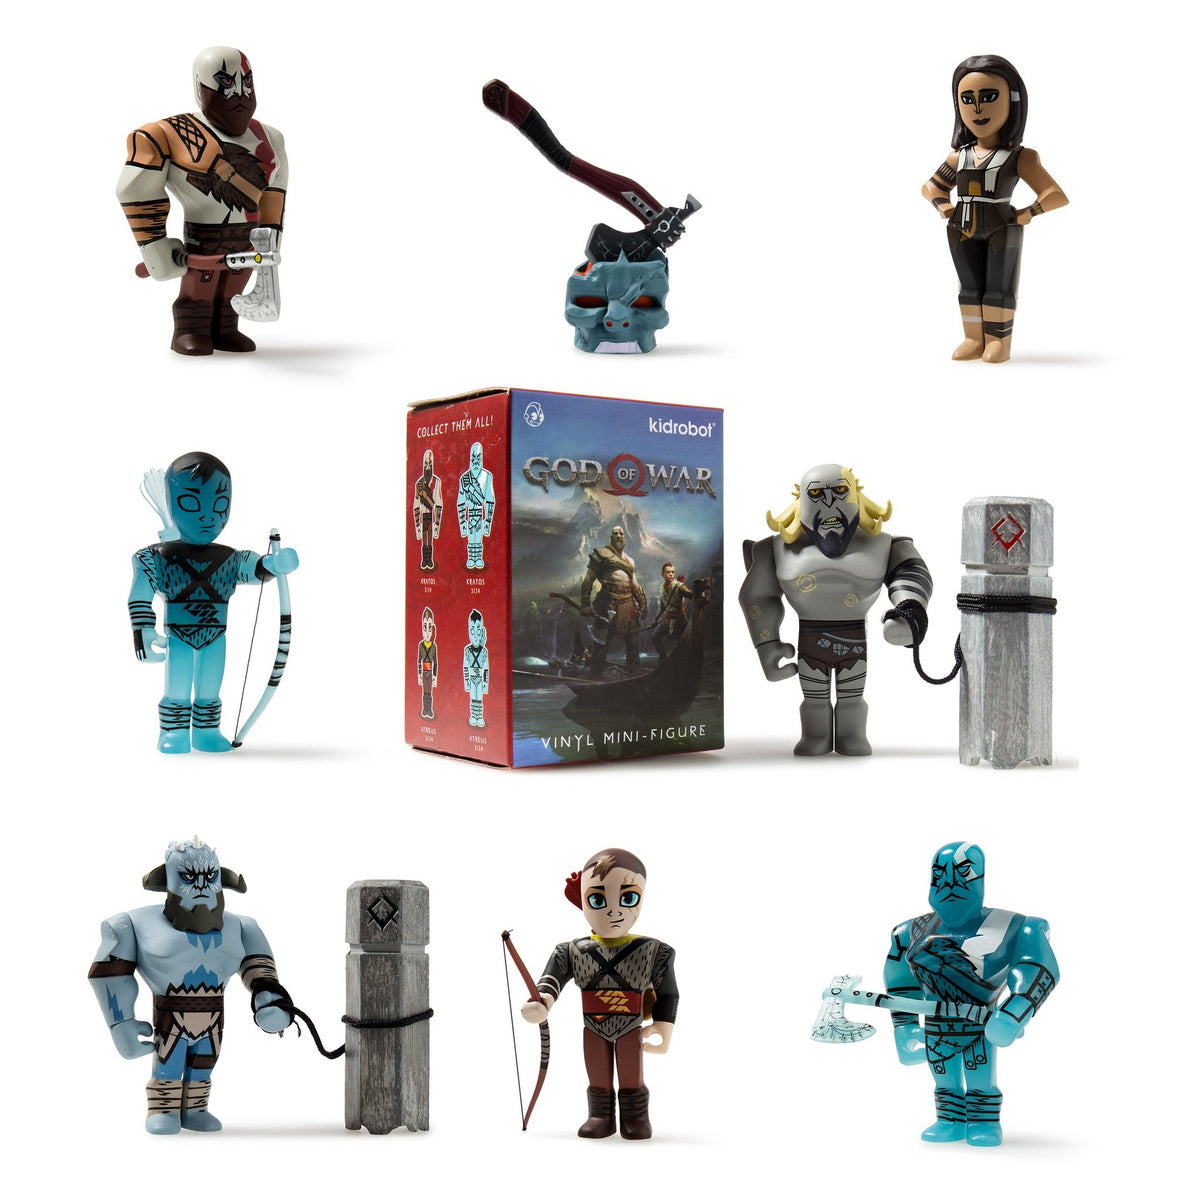 God Of War Blind Box Mini Series Toy Figure by Kidrobot